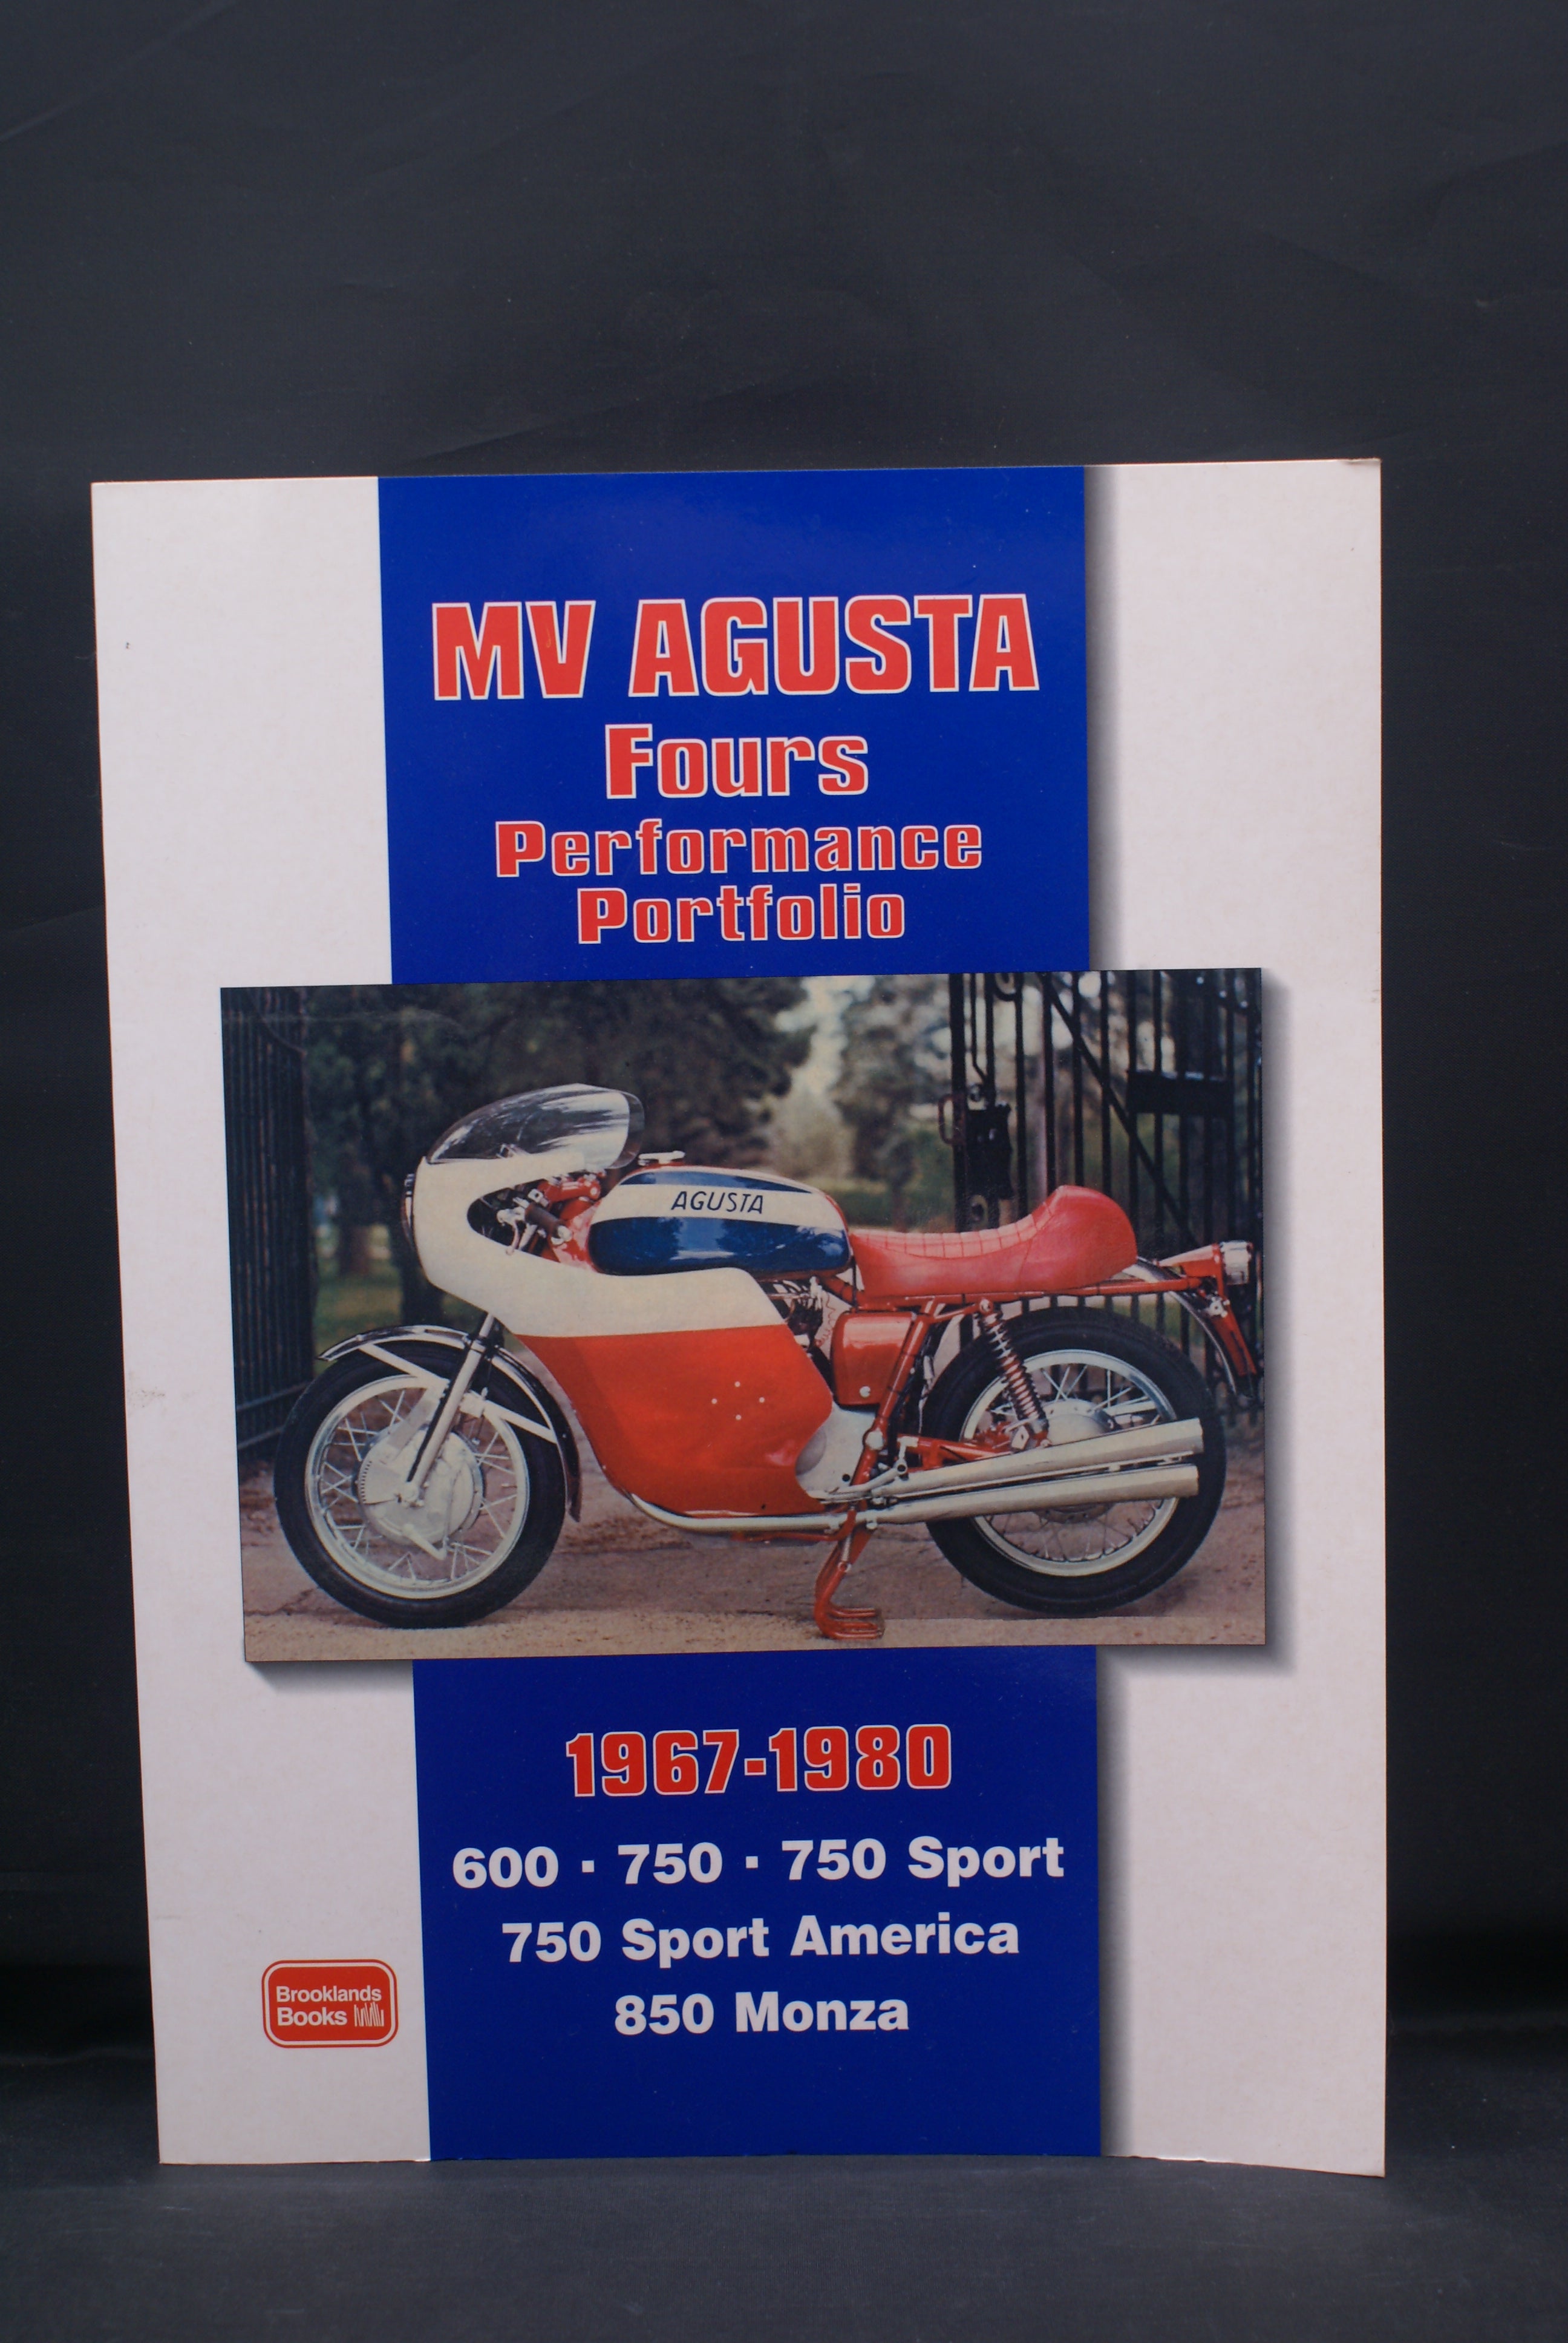 MV Agusta Fours 1967-1980